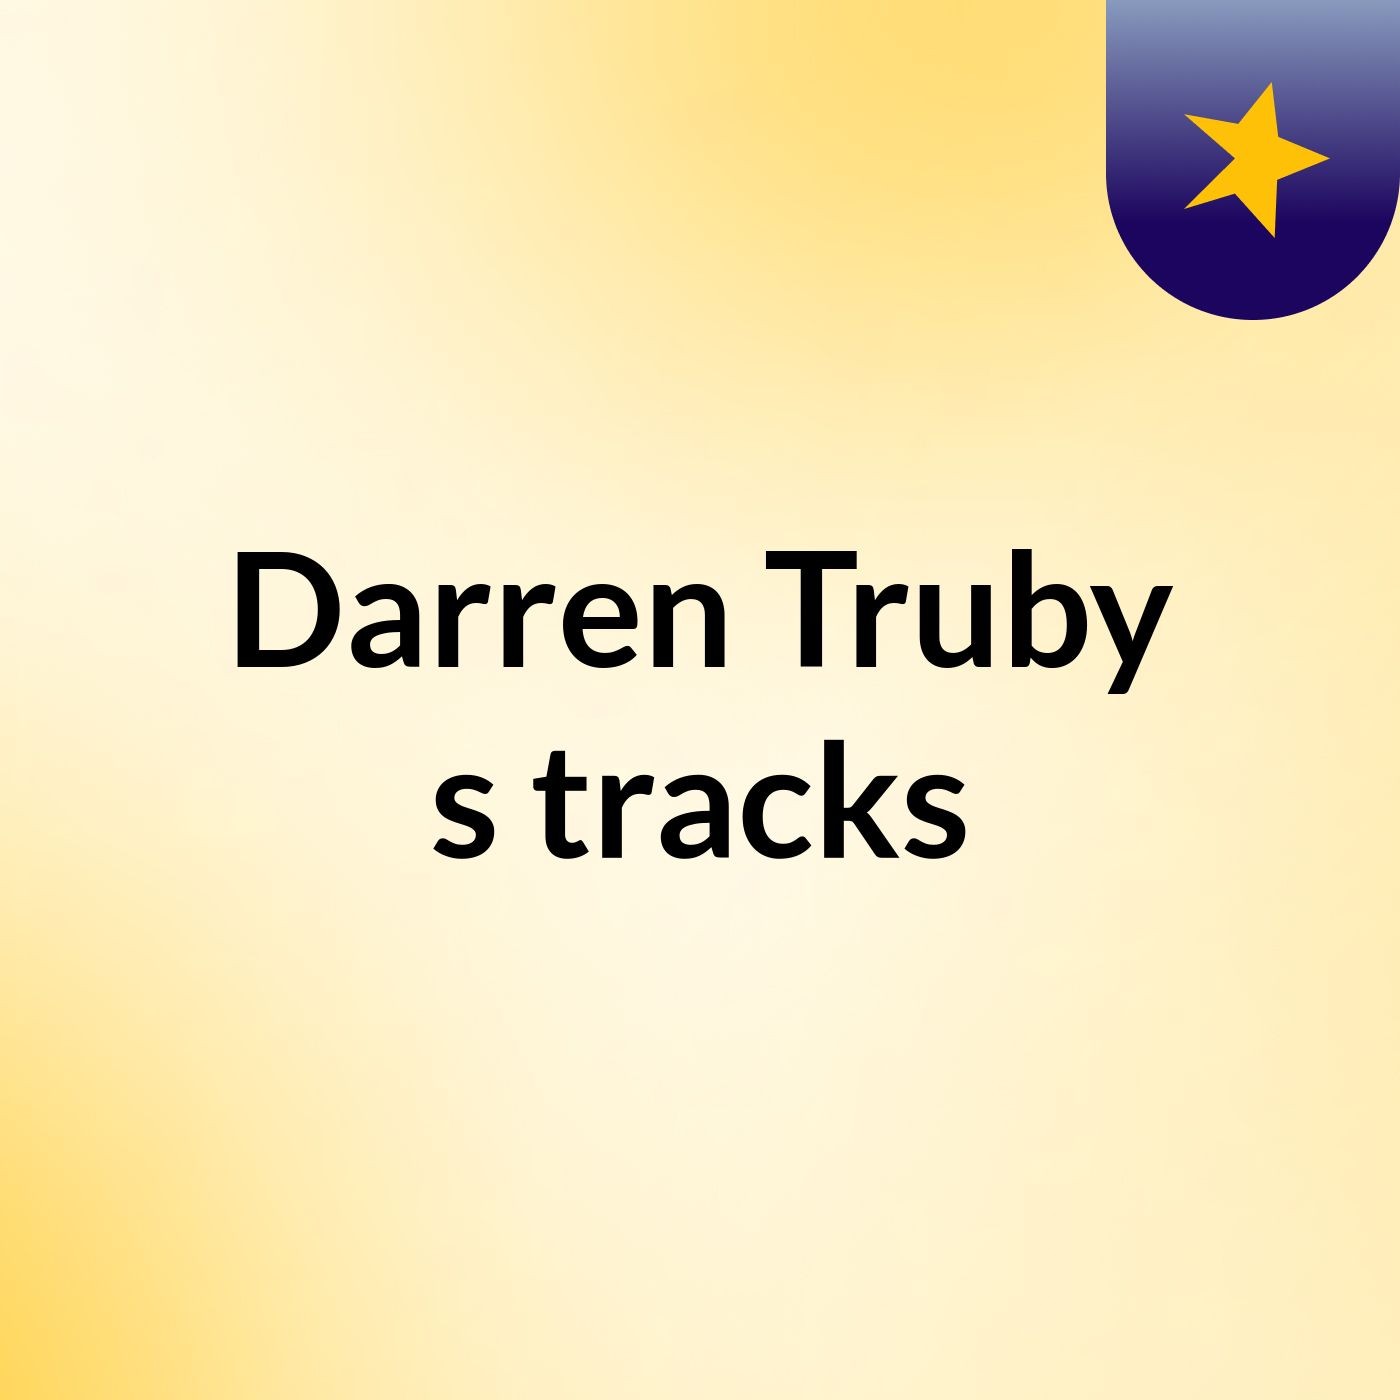 Darren Truby's tracks